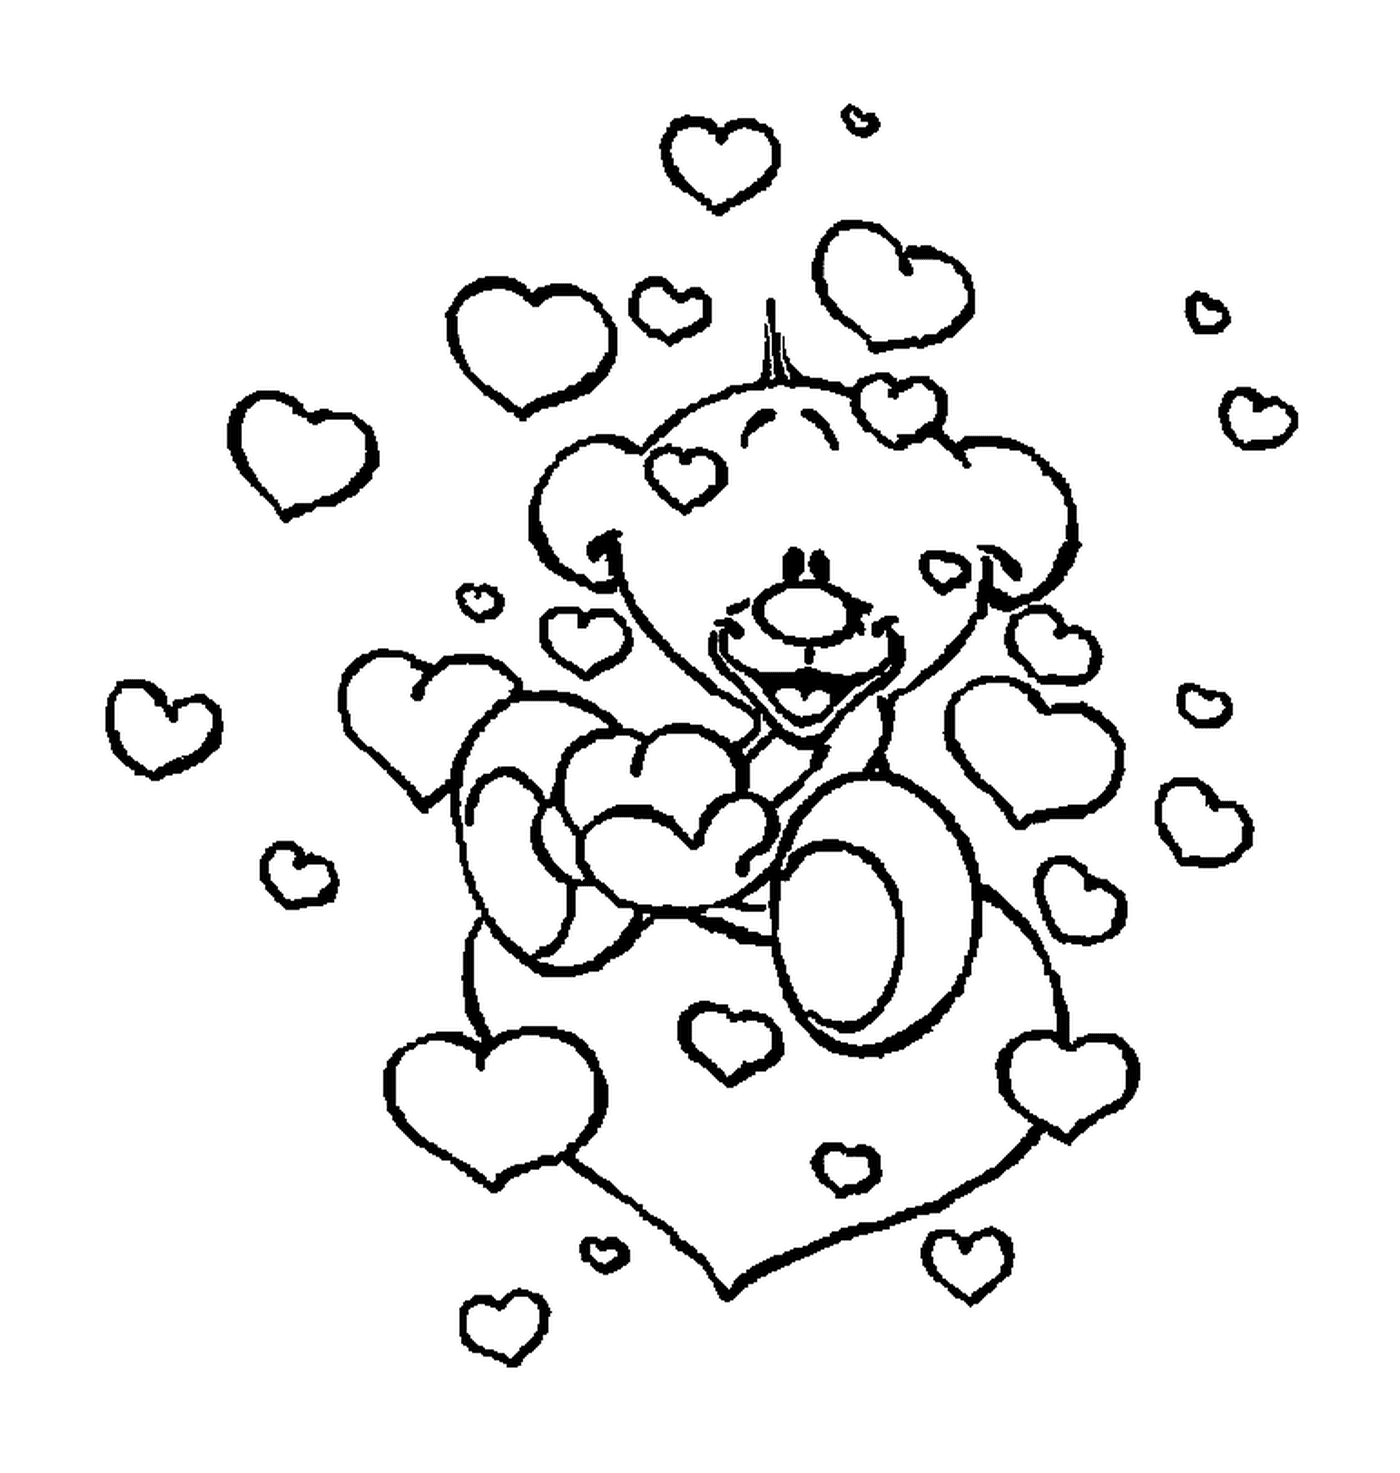  Un osito de peluche con corazones 